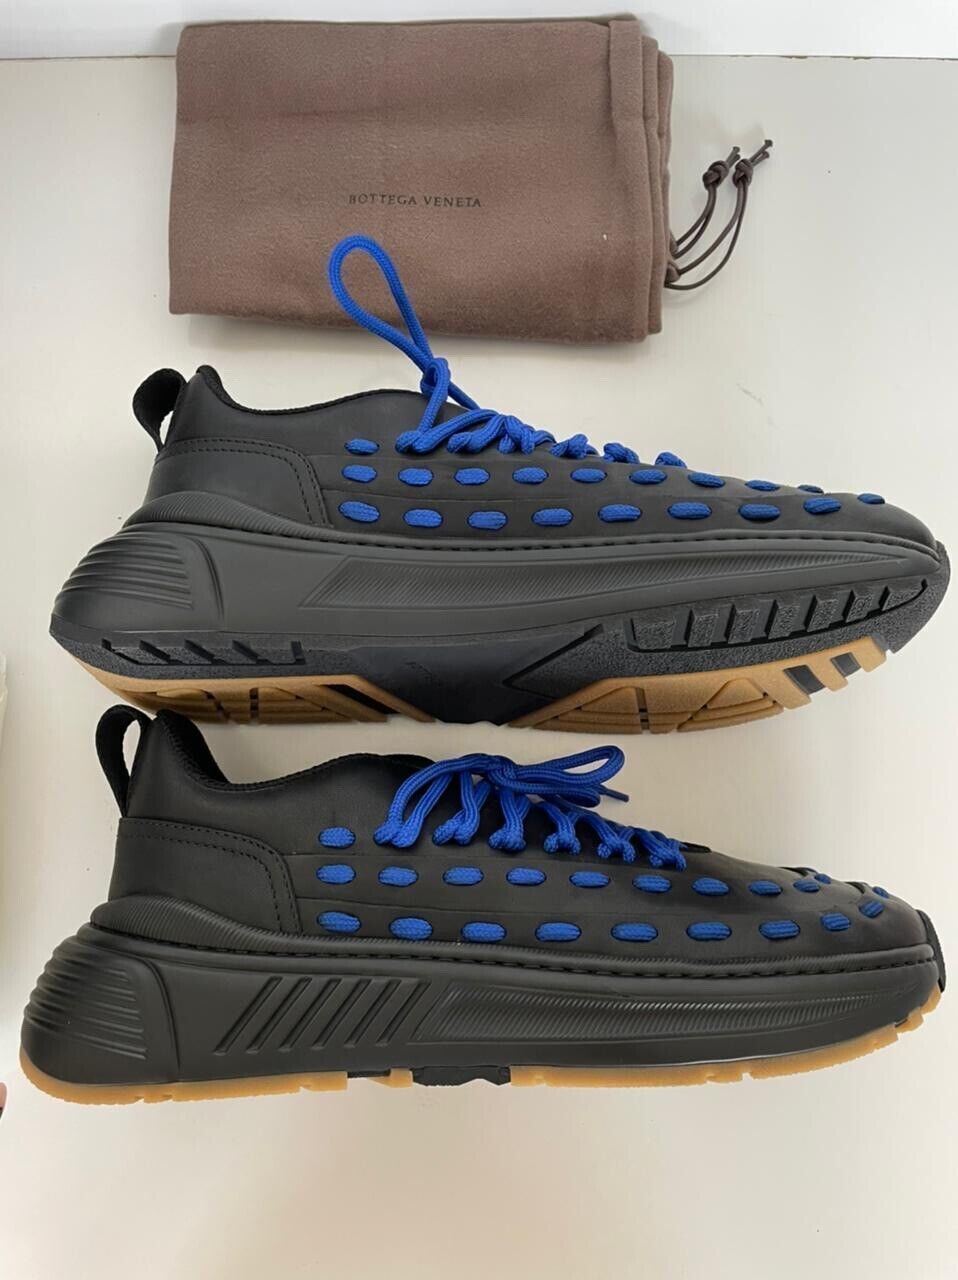 NIB $950 Bottega Veneta Mens Leather Black/Blue Sneakers 8.5 US 578305 1014